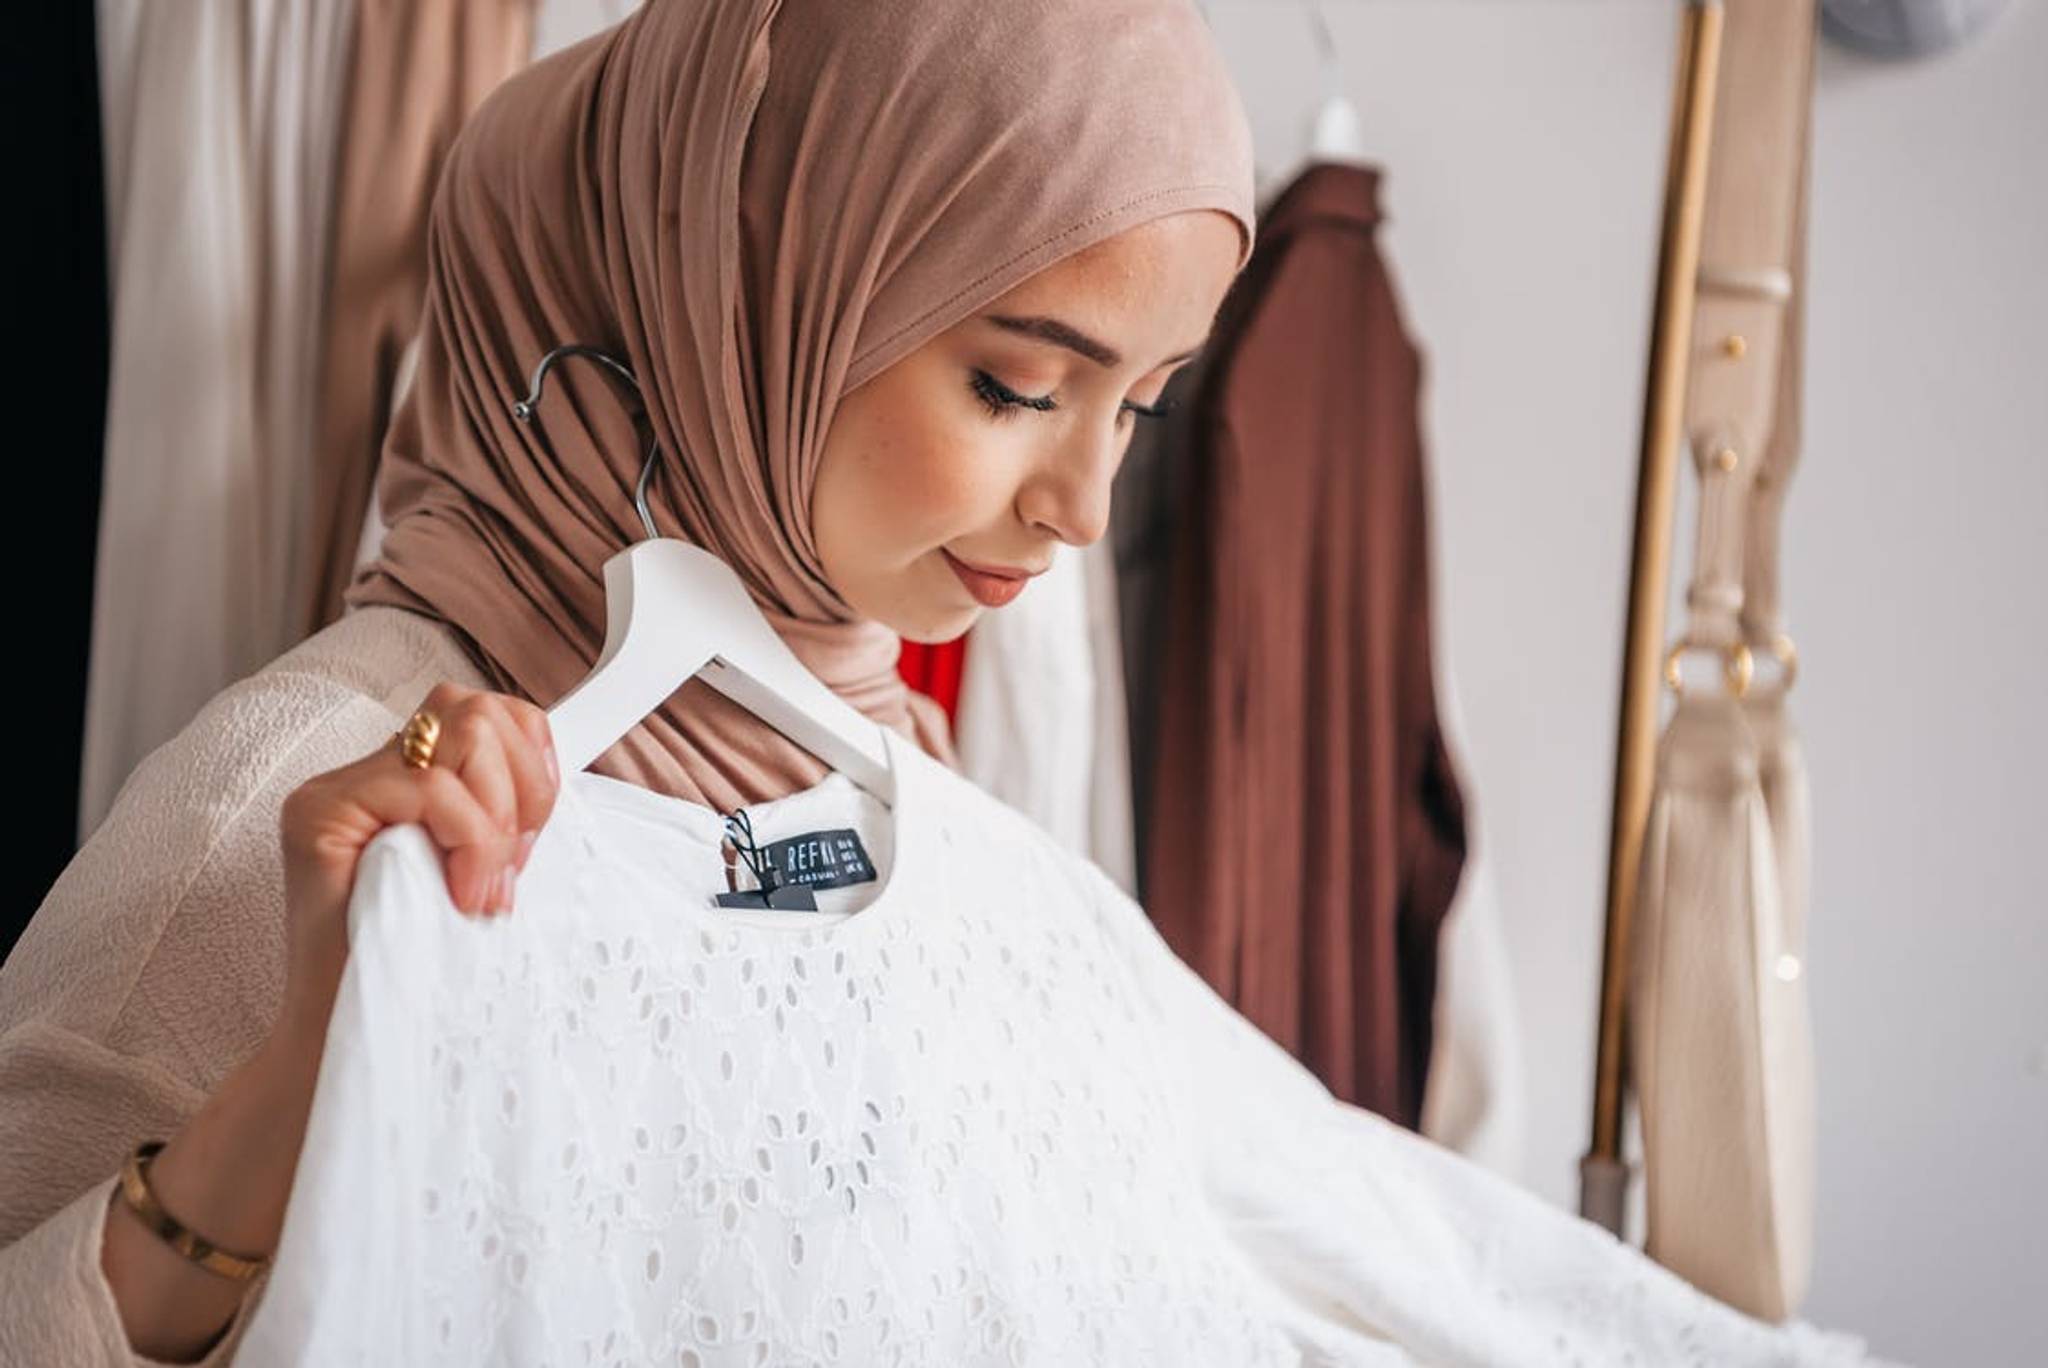 UAE shoppers embrace omnichannel retail experiences